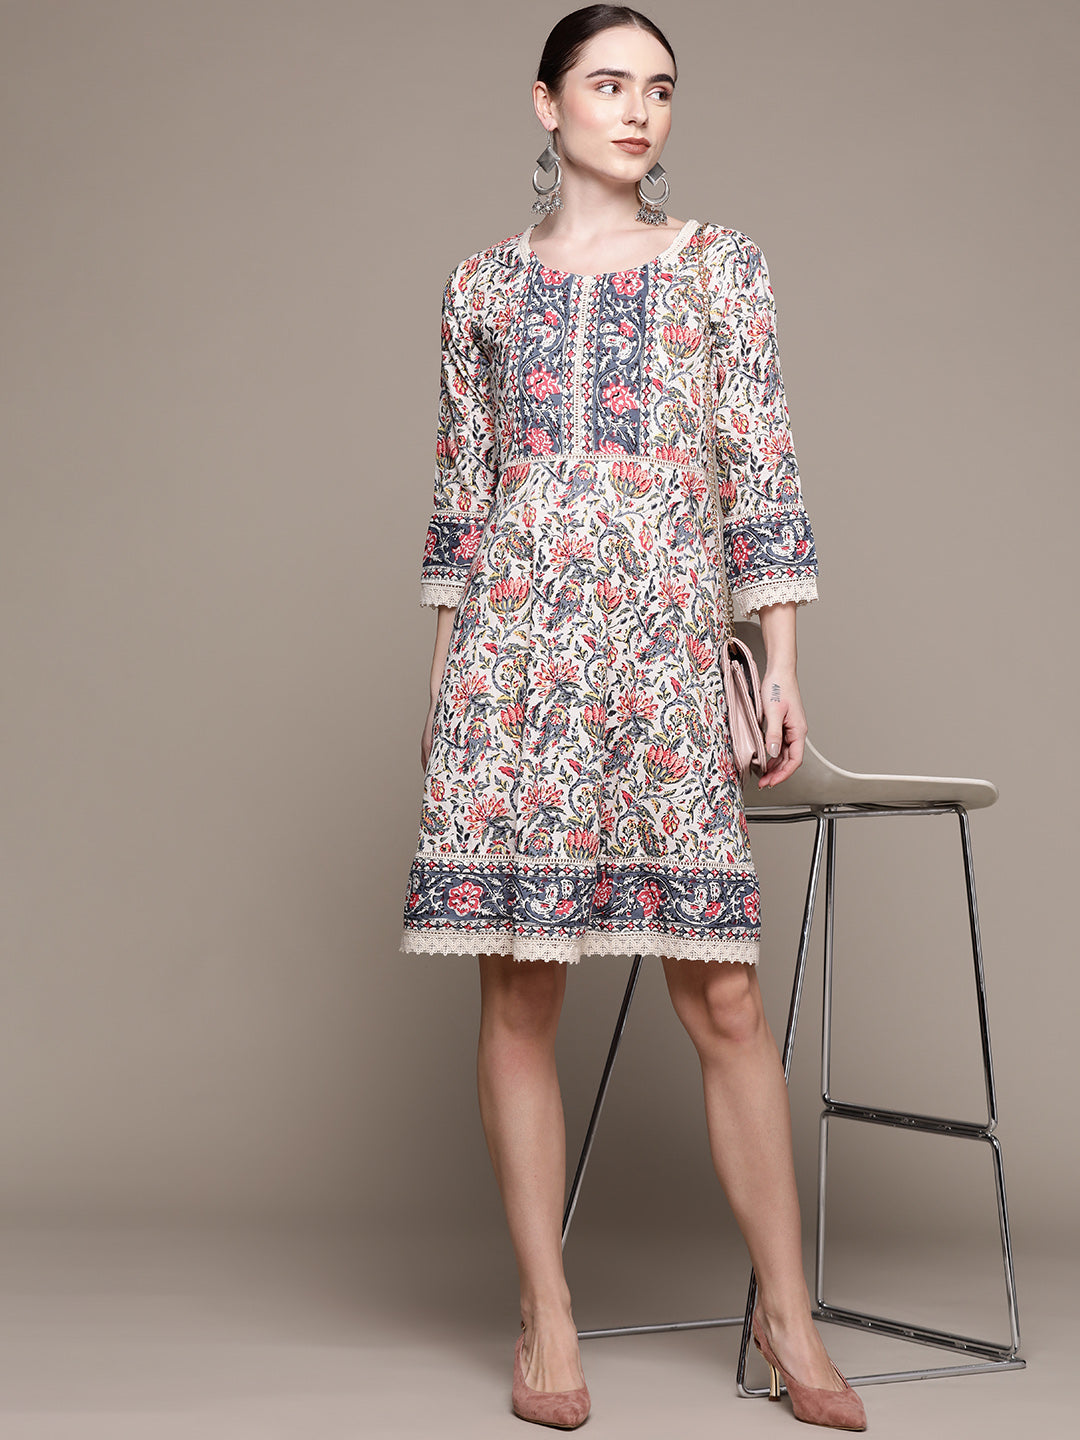 Ishin Women's Cotton Multicolor Printed A-Line Dress